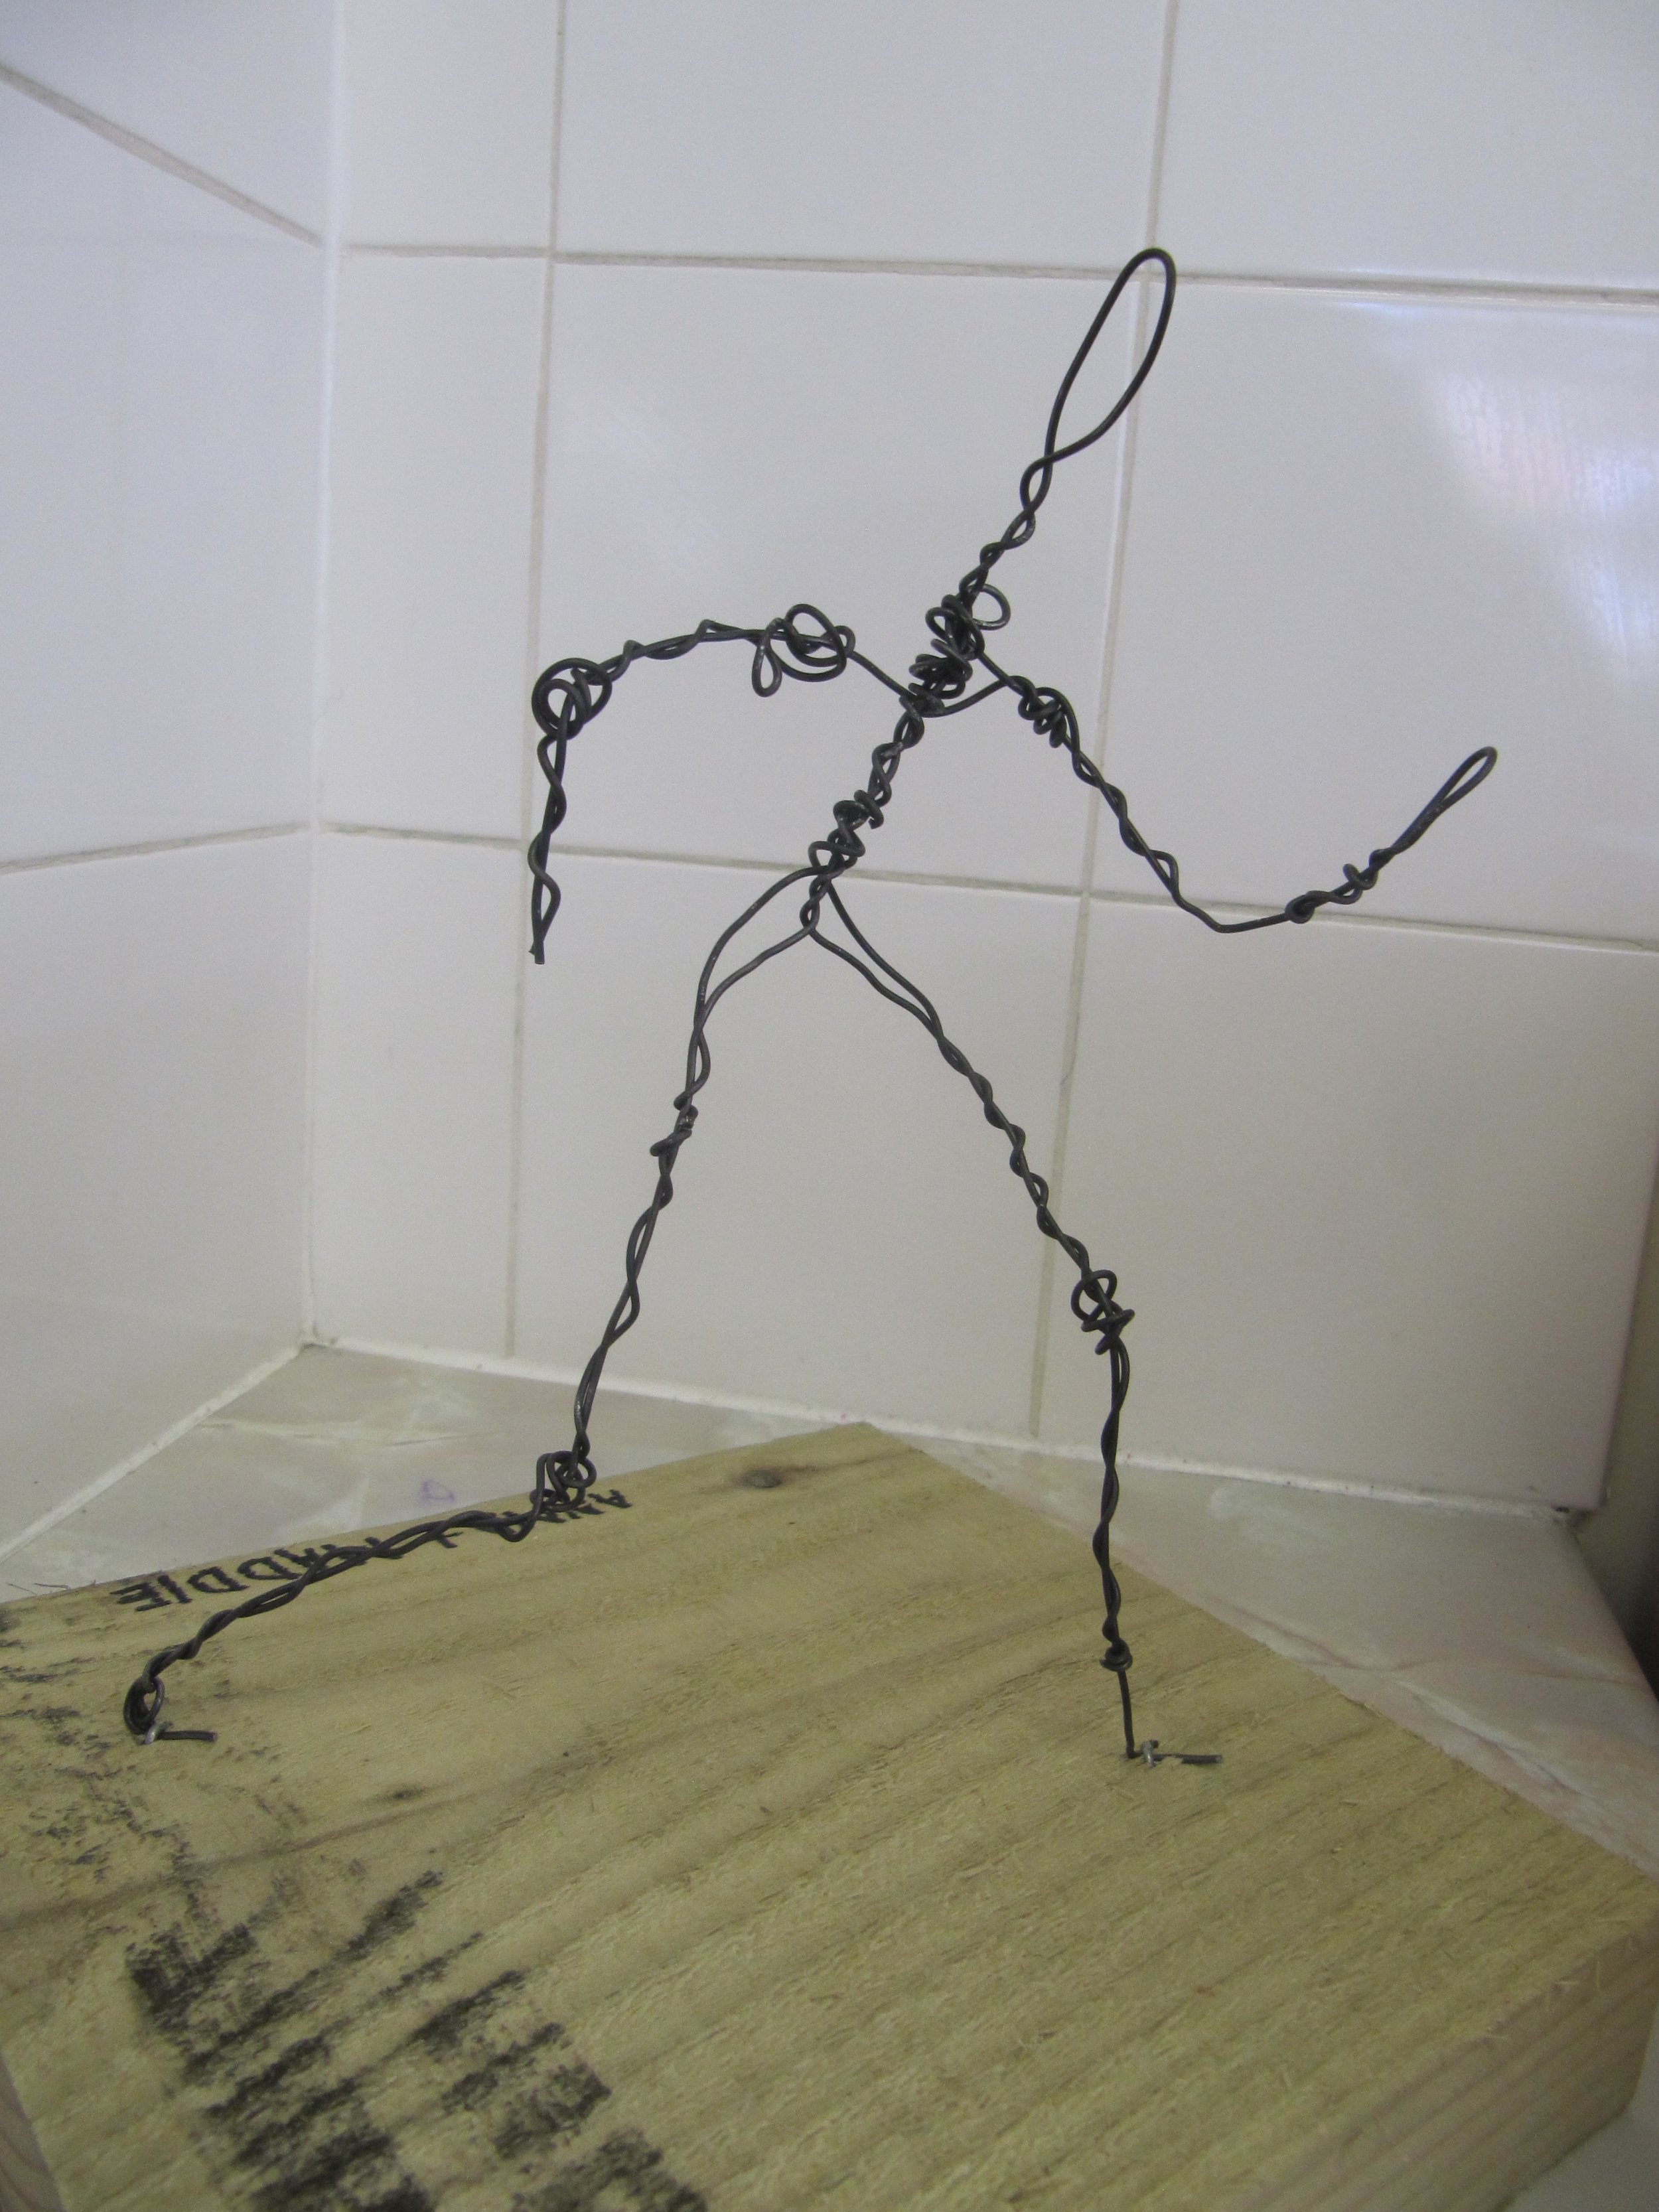 Giacometti-inspired figure